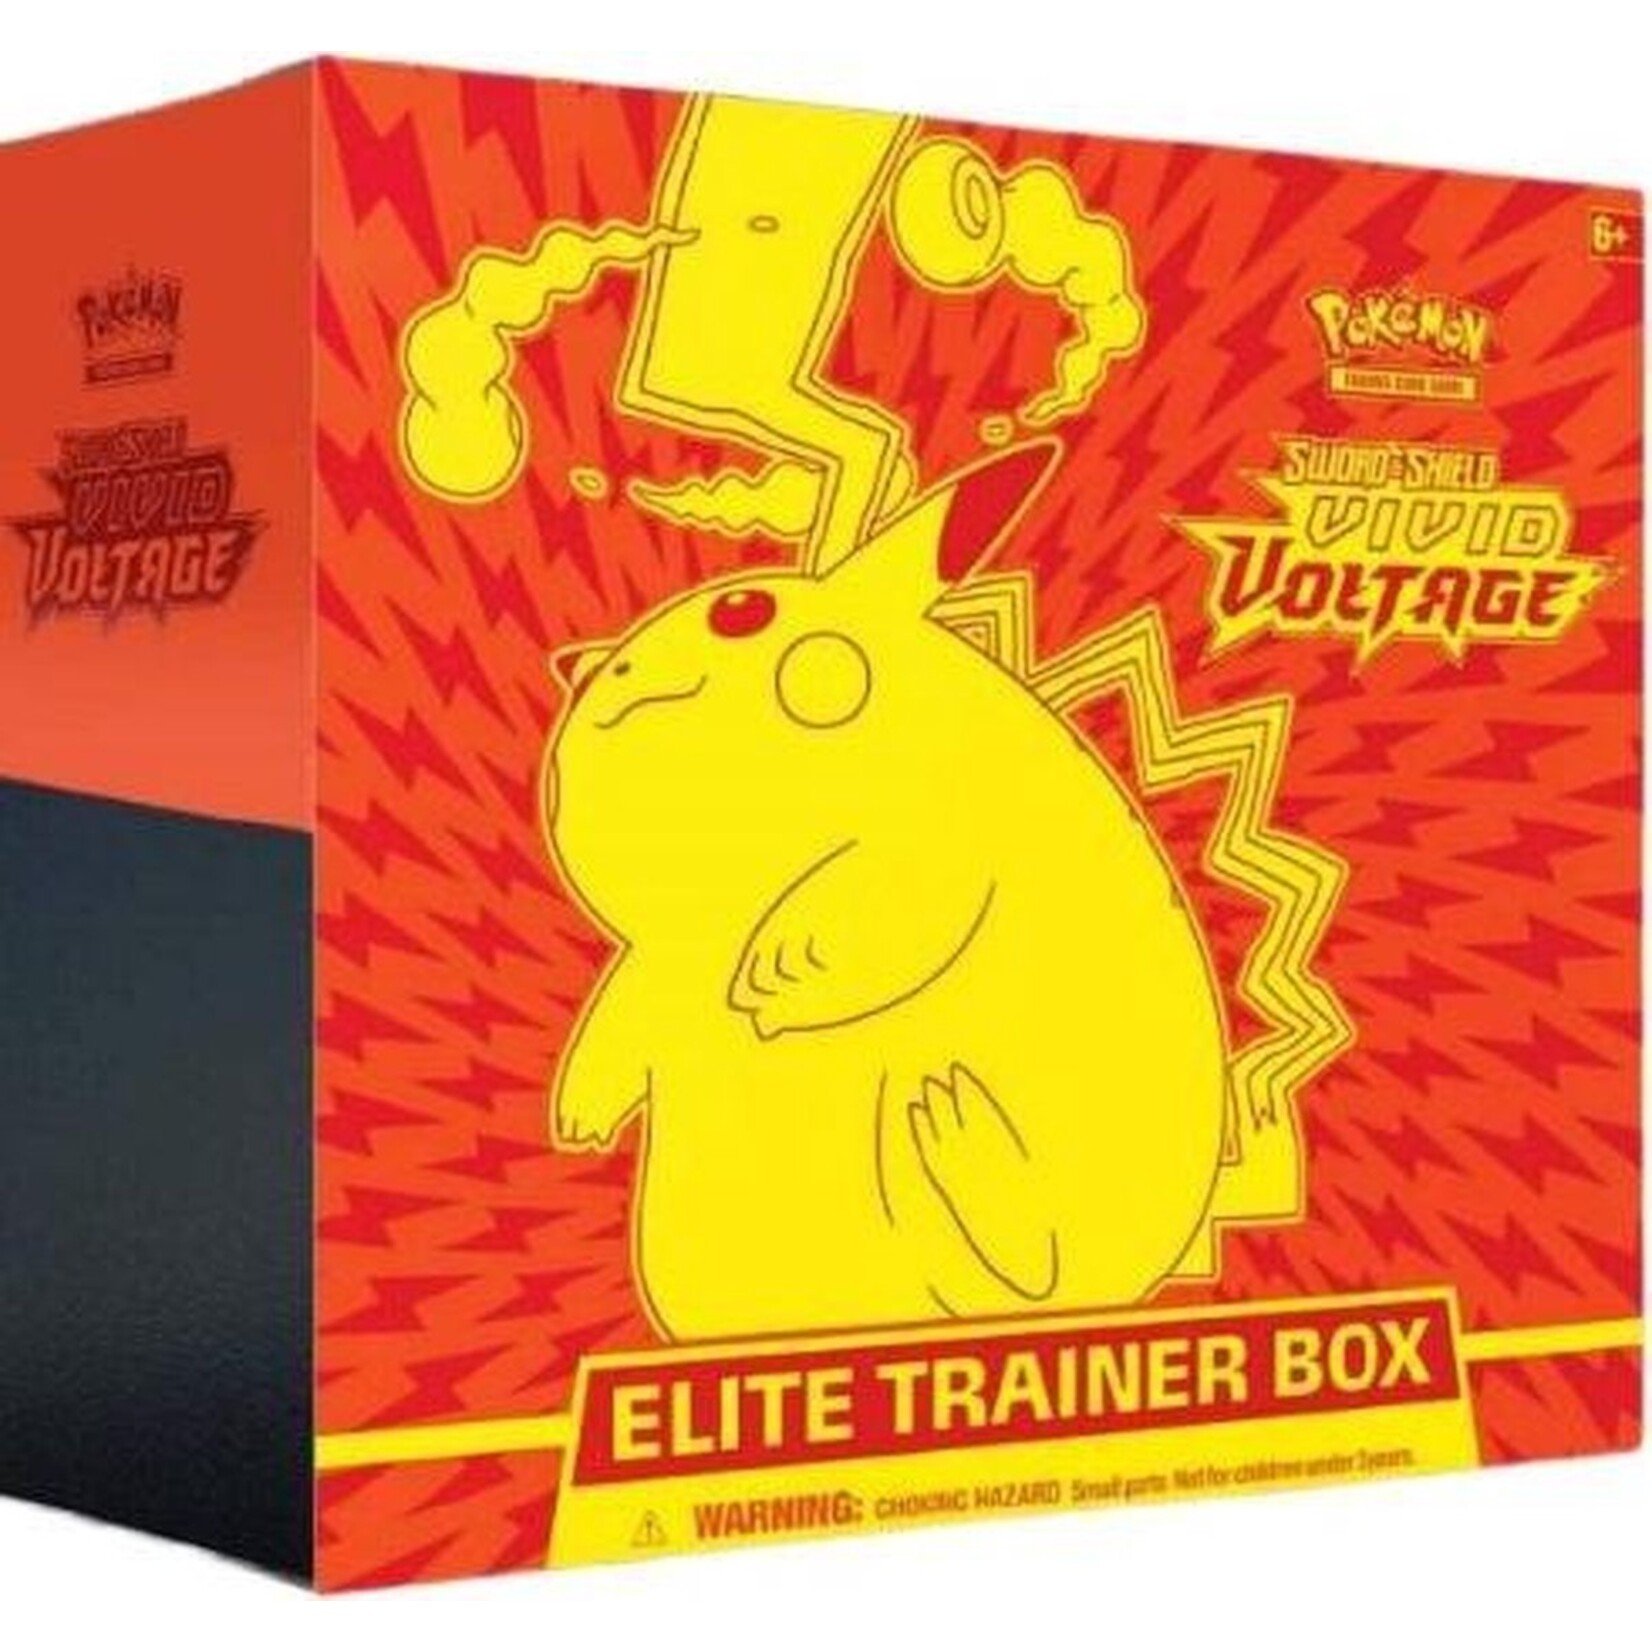 Pokémon Vivid voltage elite trainer box